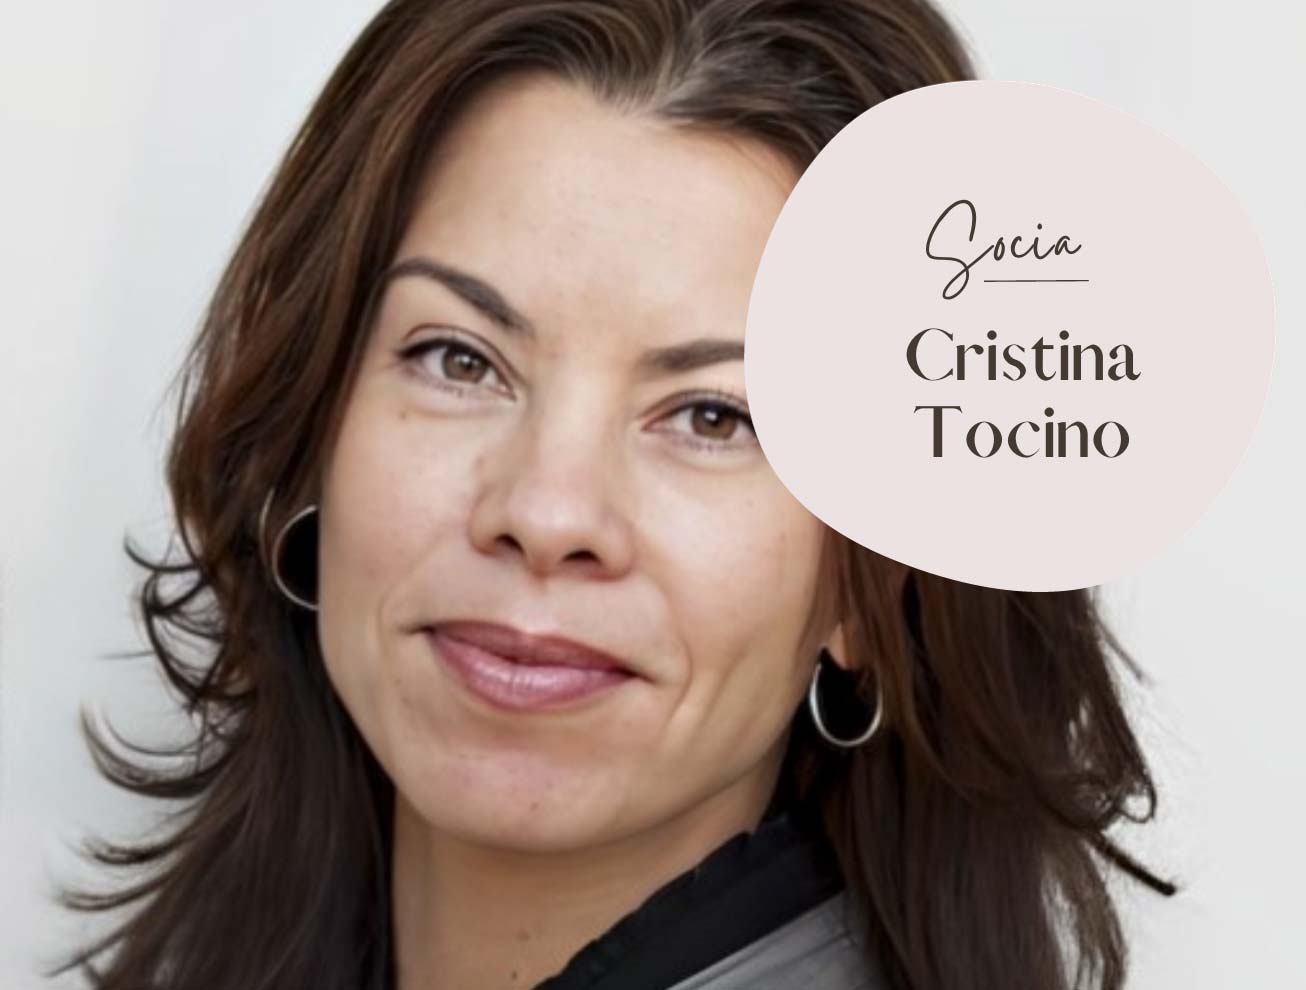 Cristina Tocino